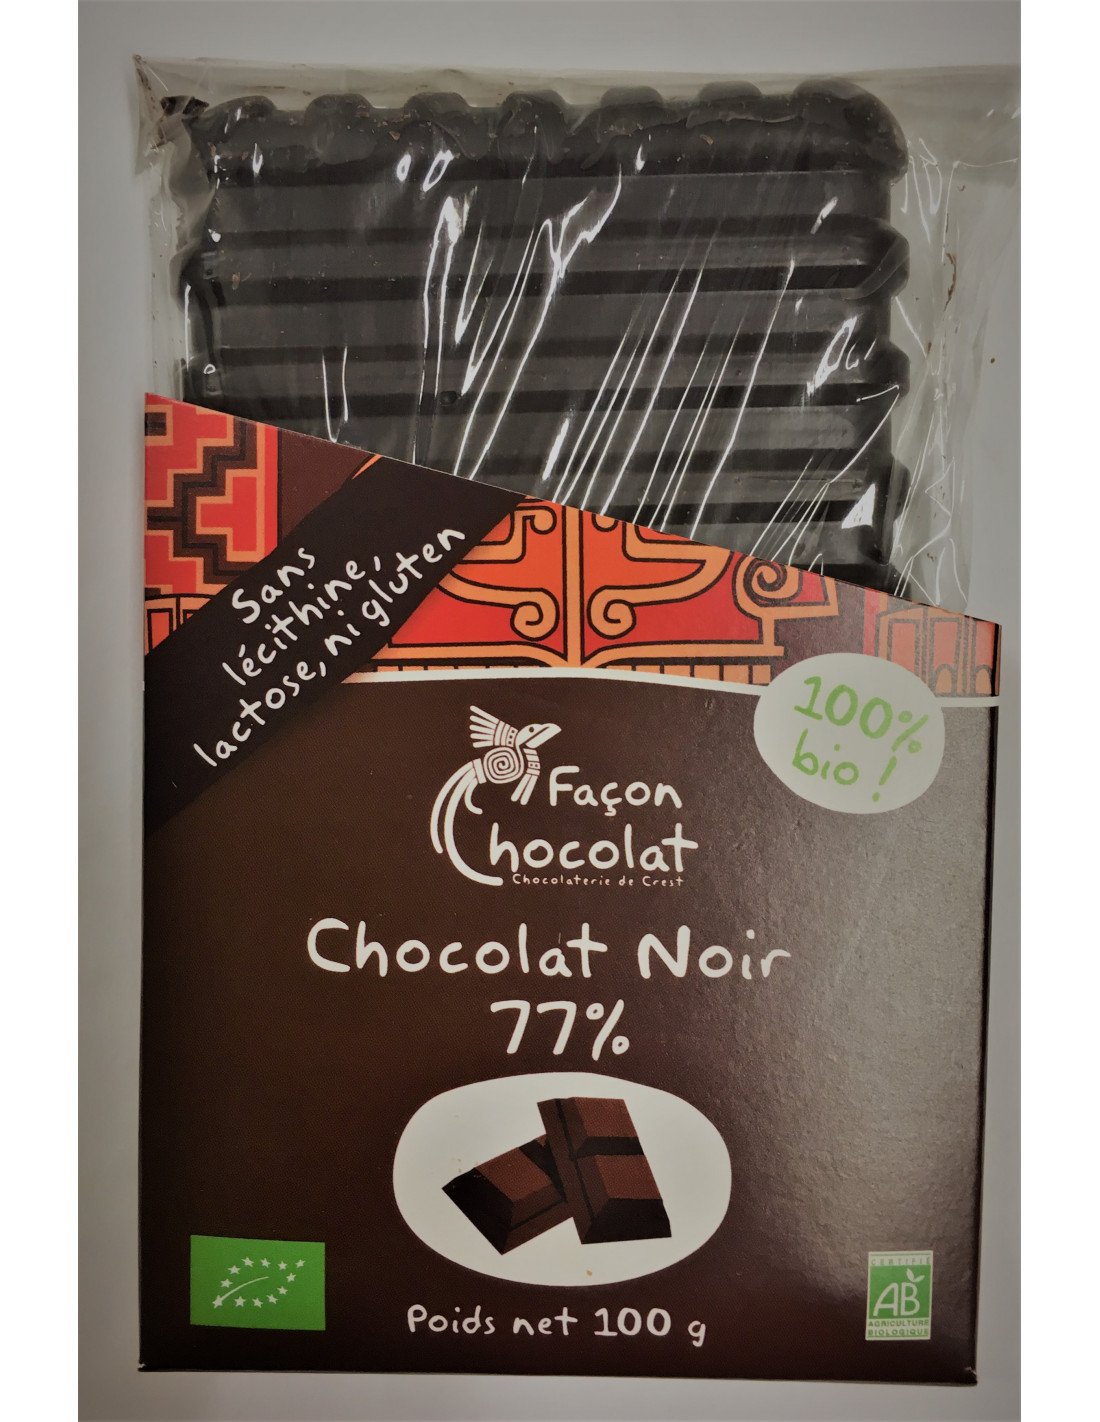 Tablette Chocolat de Noël - Chocolat noir